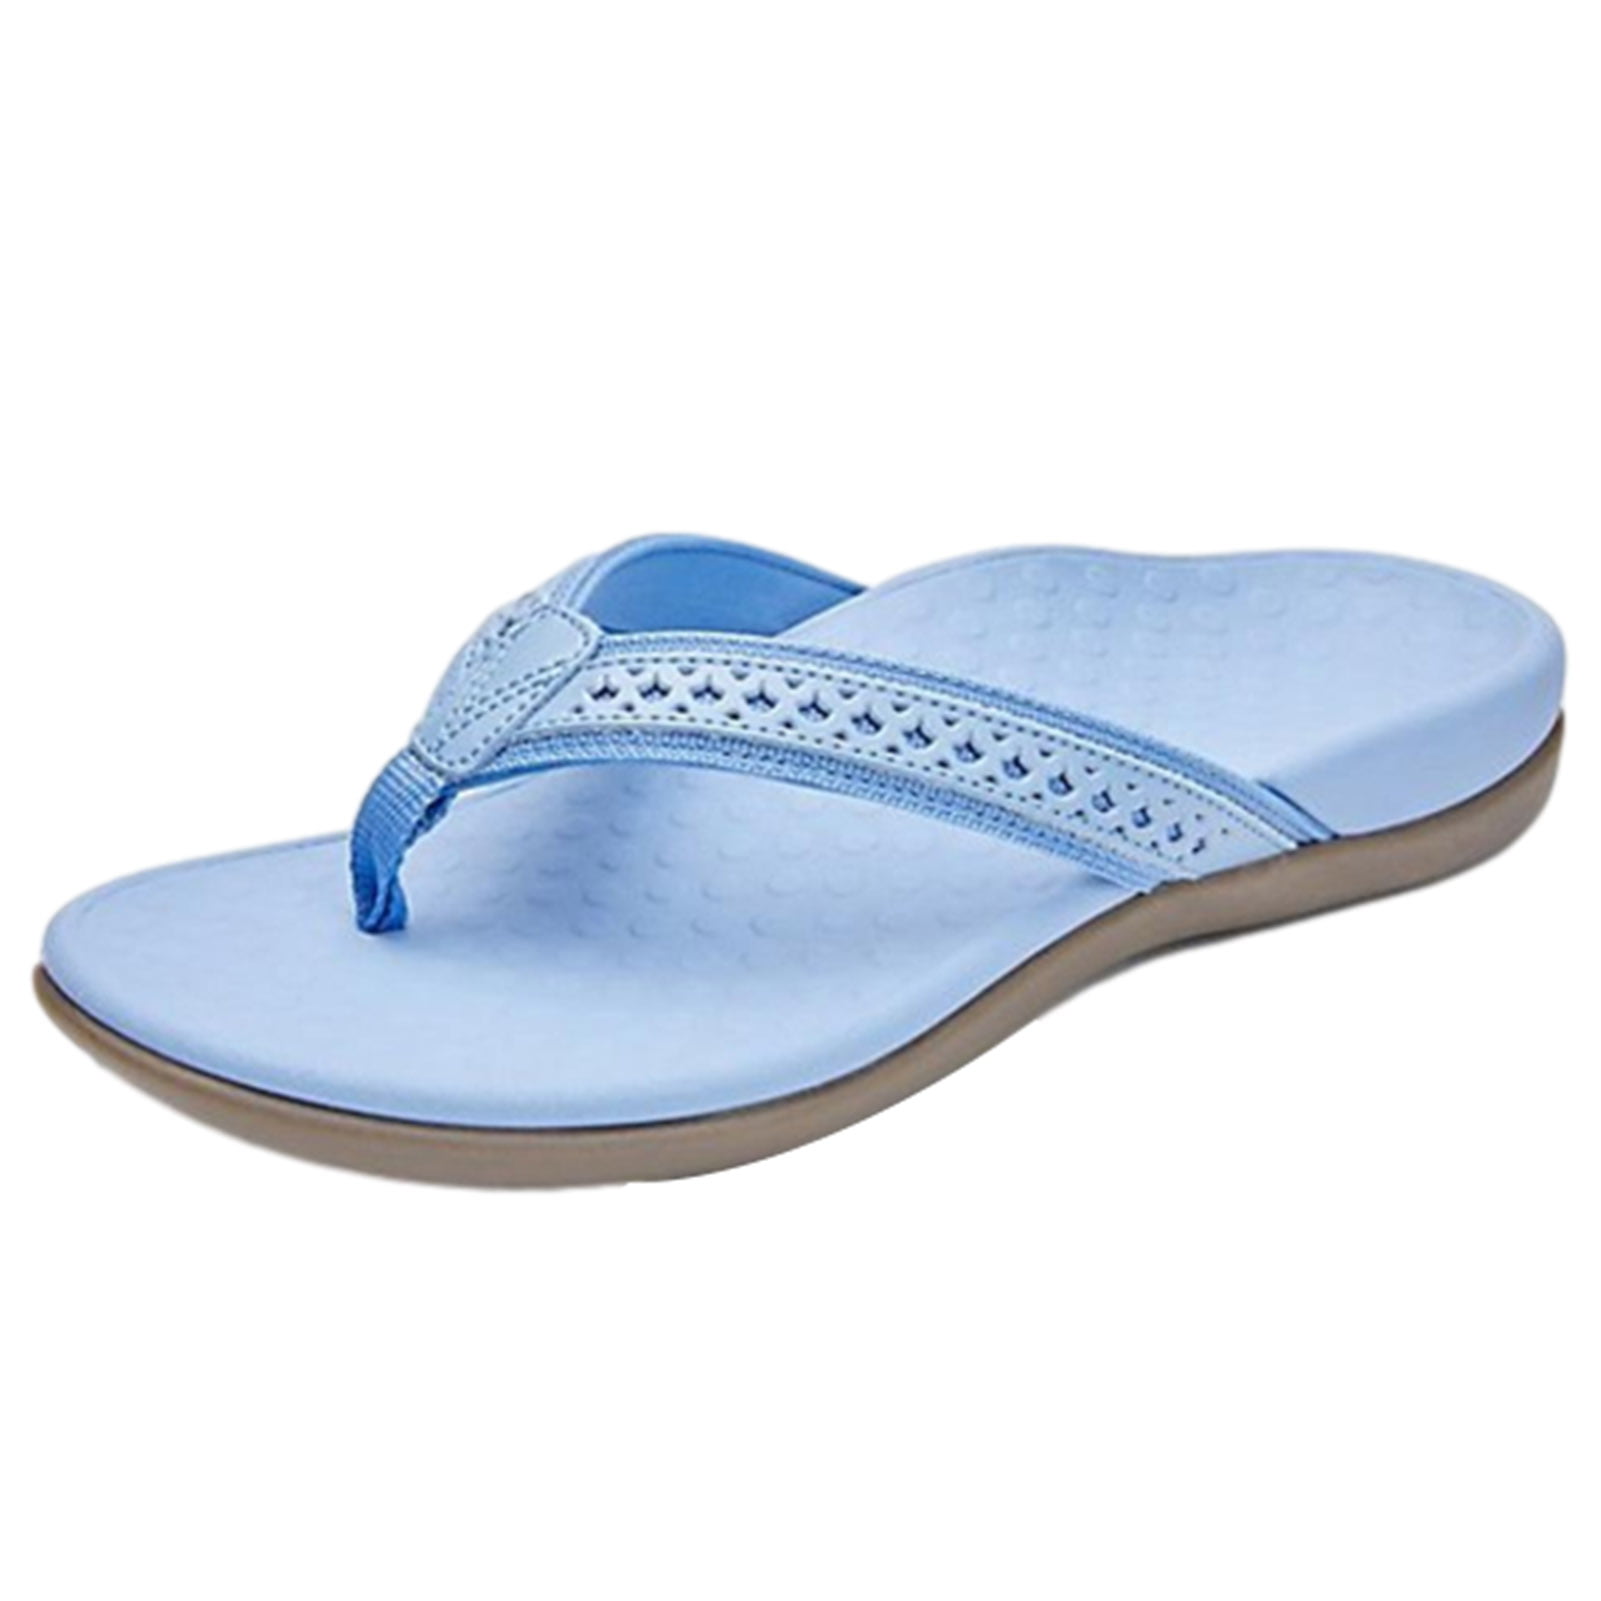 AeroThotic Original Orthotic Comfort Flip Flops Blue Womens Size 8